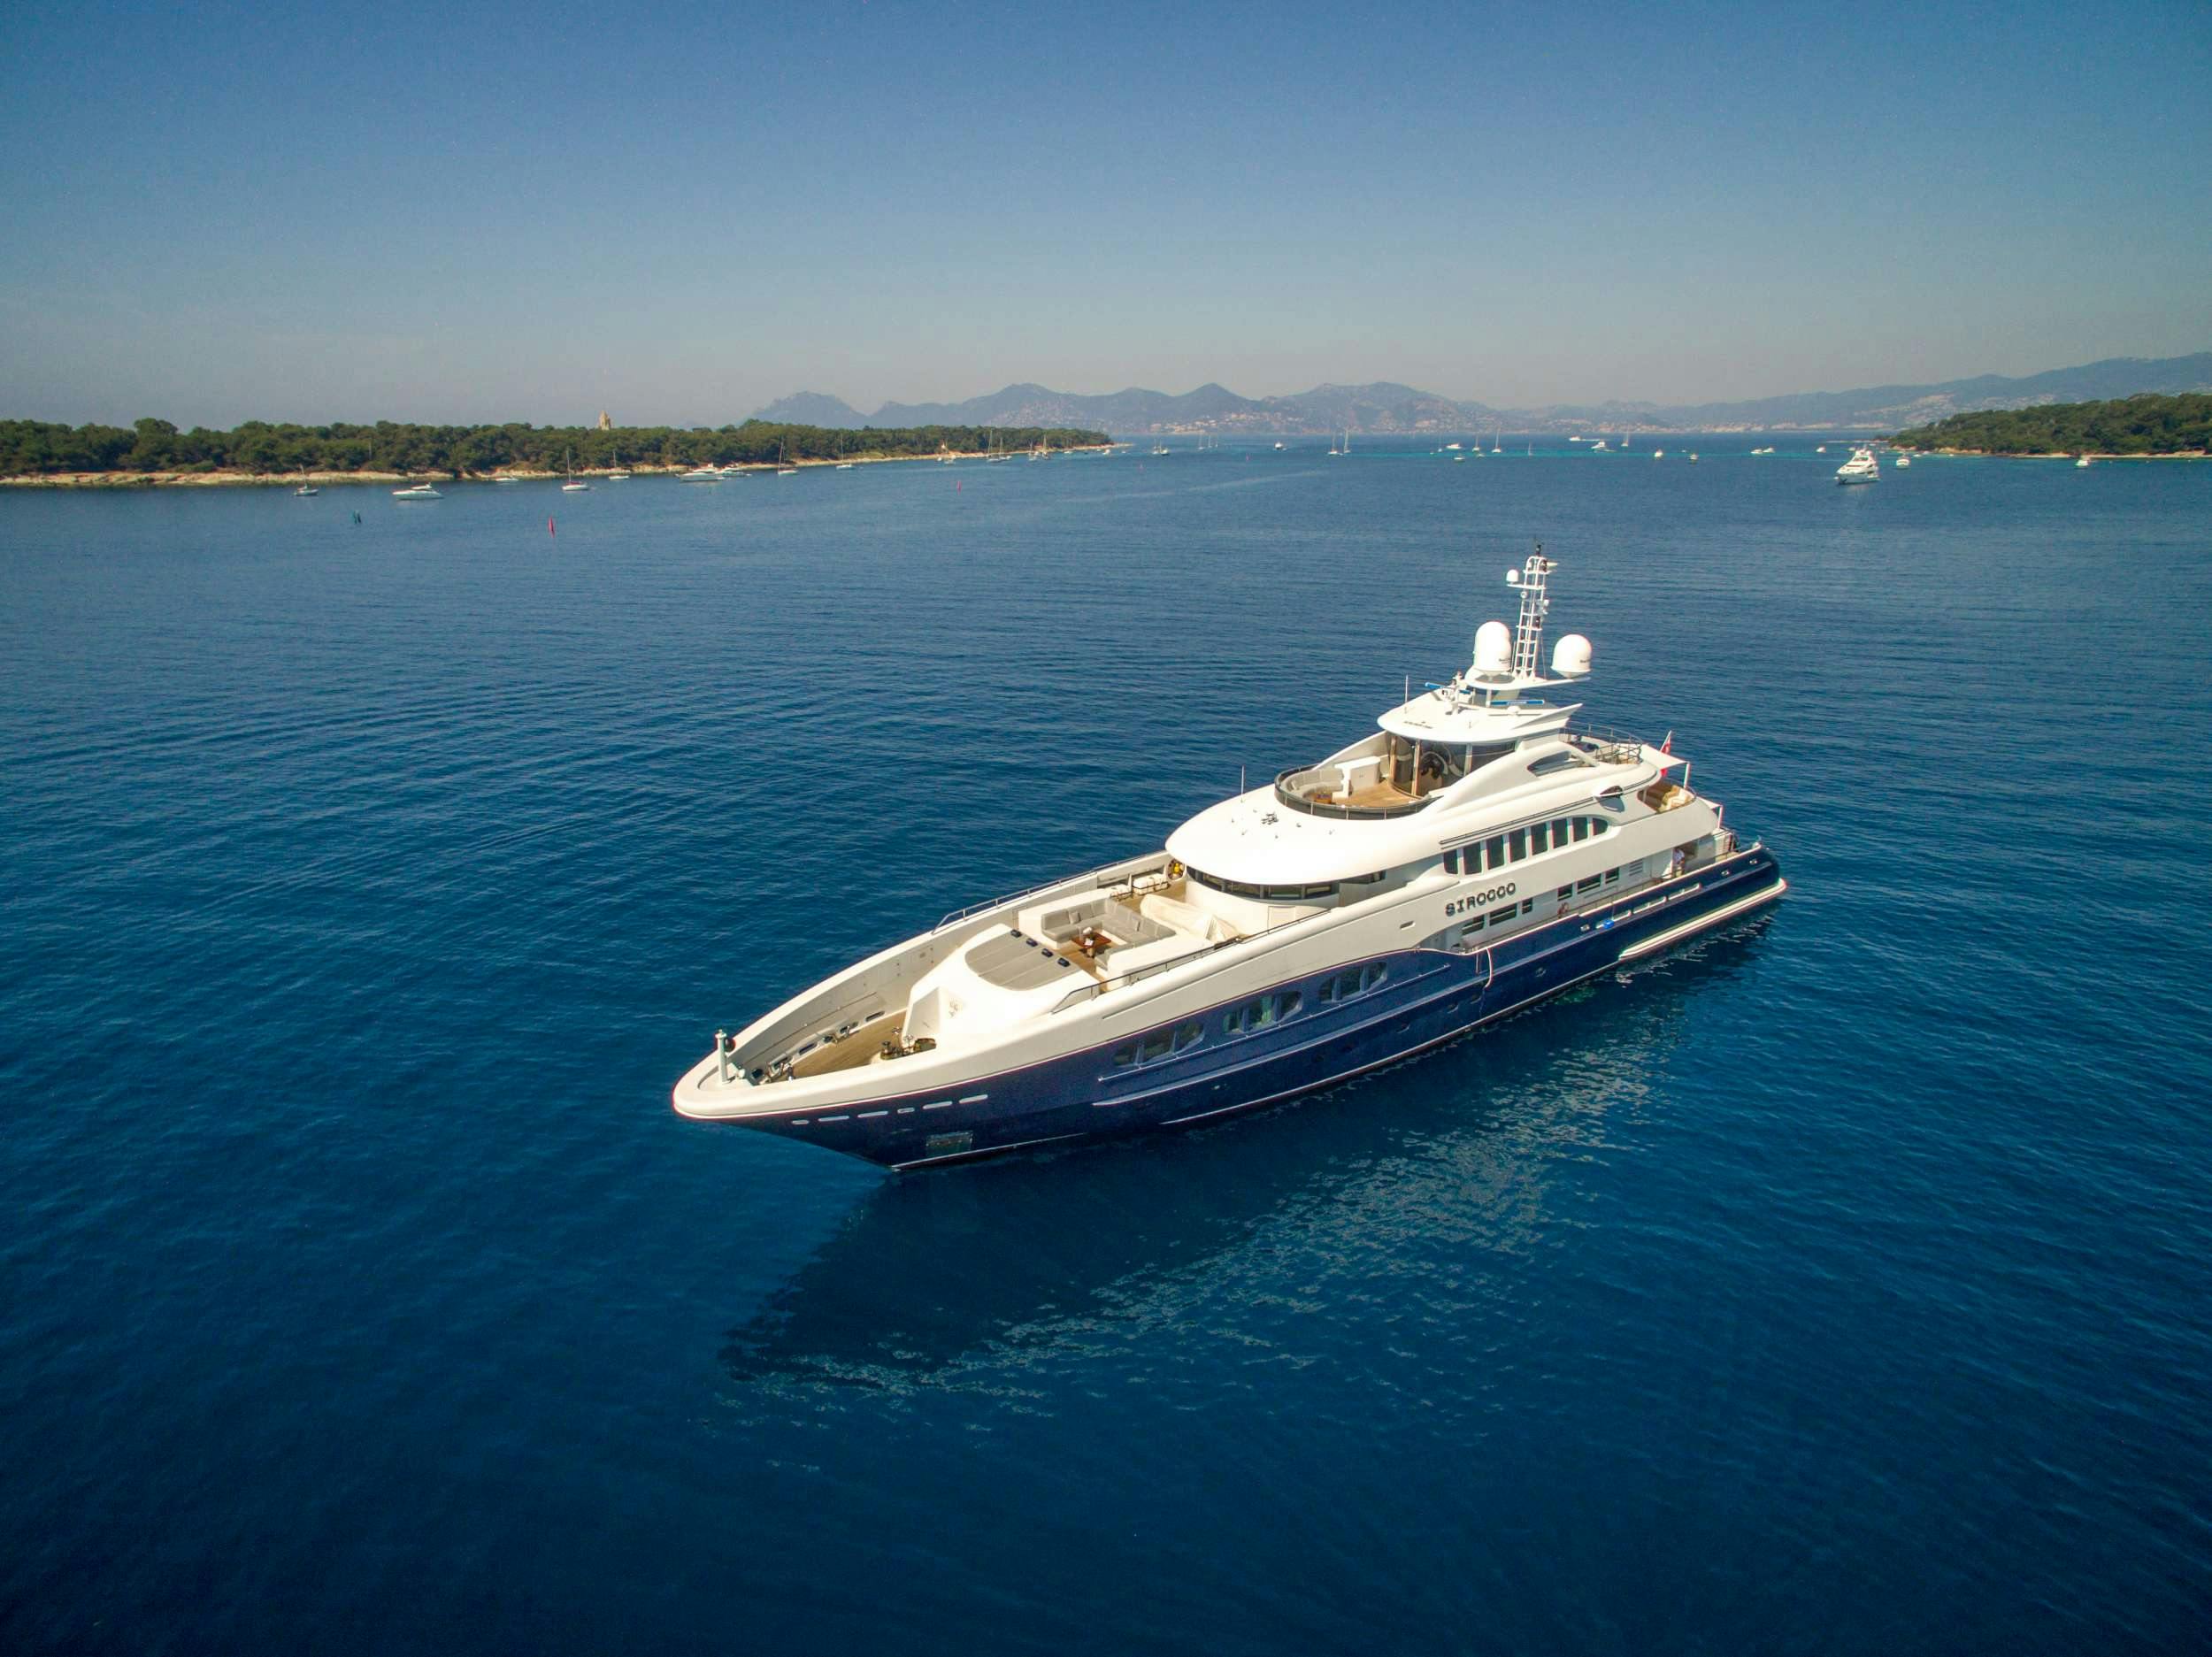 sirocco - Yacht Charter France & Boat hire in Fr. Riviera & Tyrrhenian Sea 1